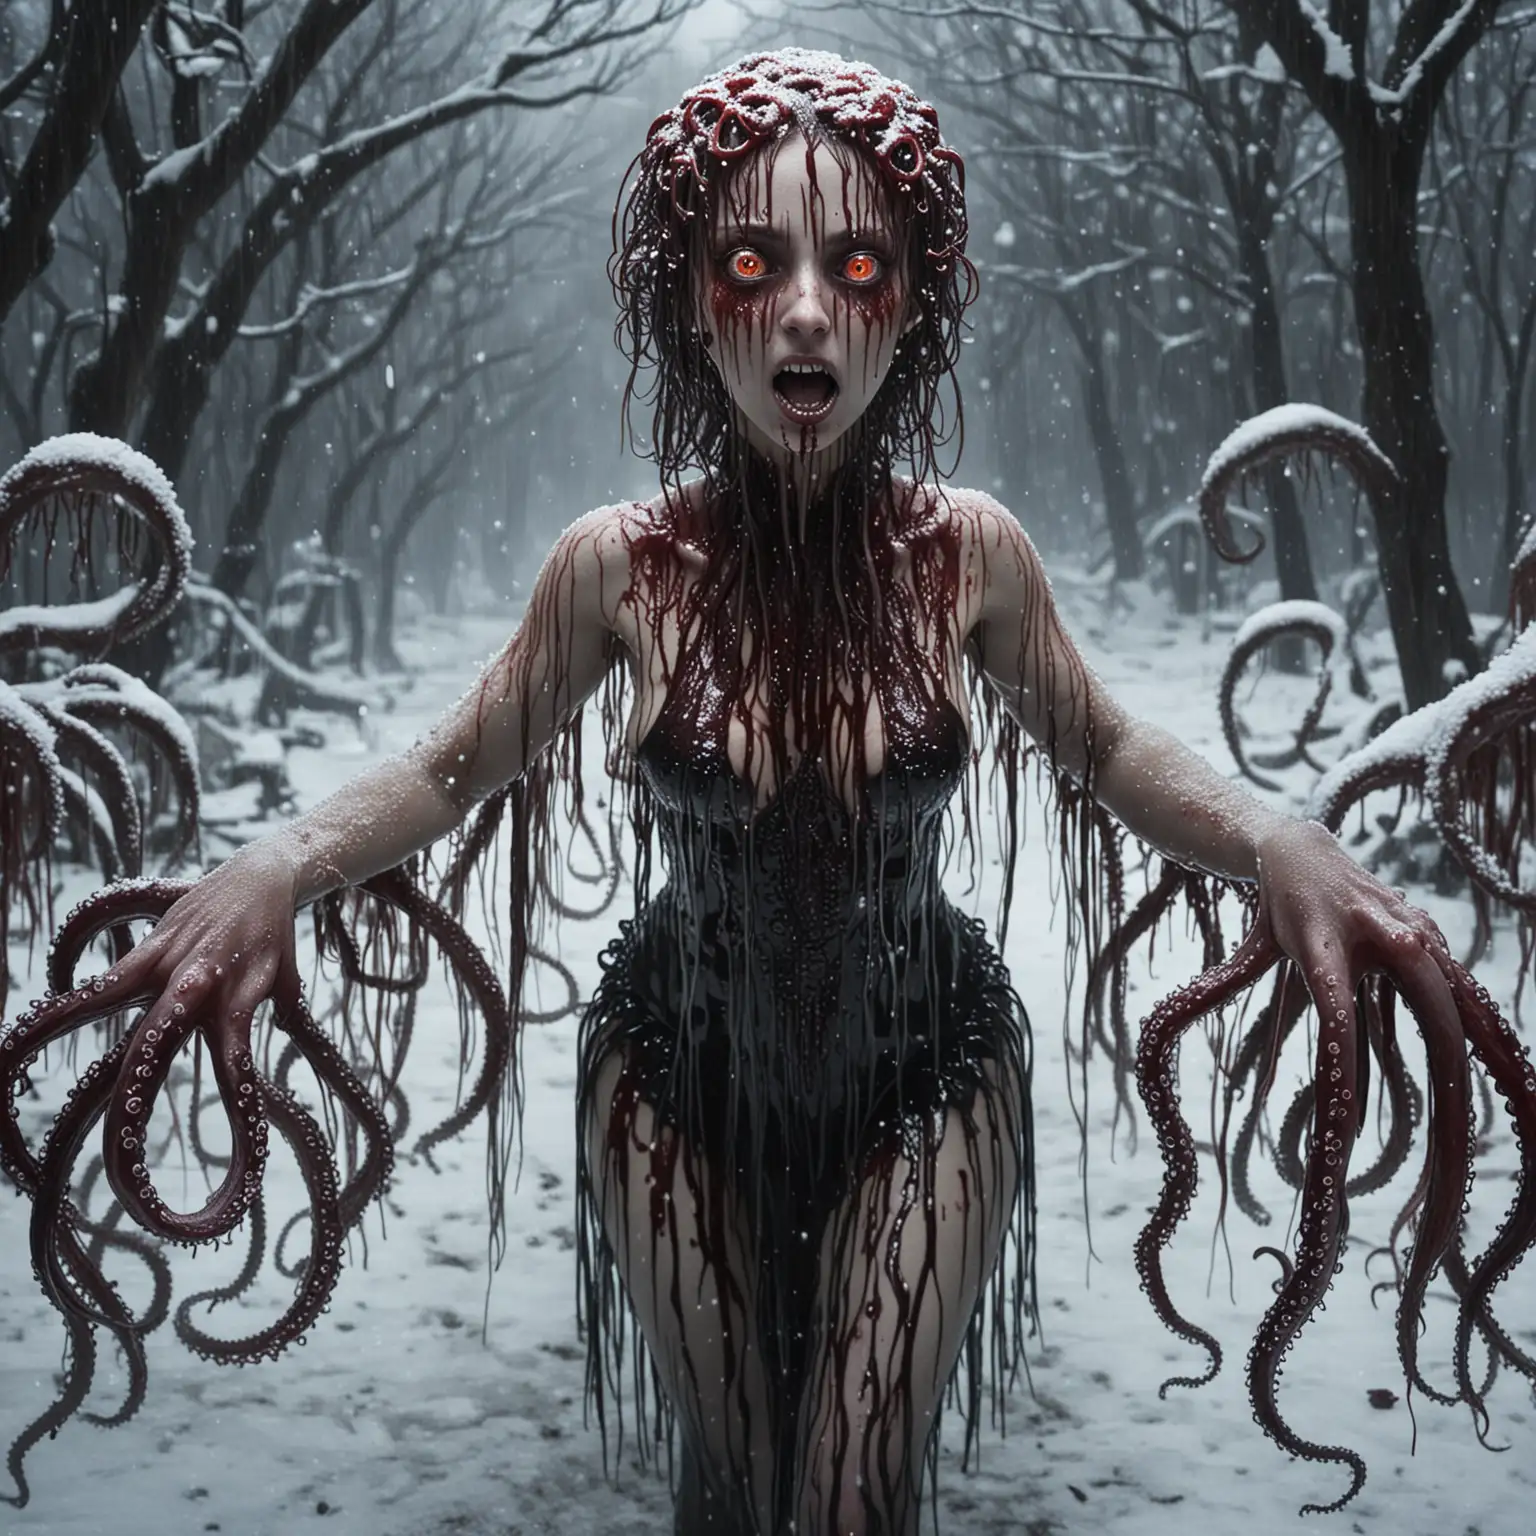 Balarina, Slimy tentacles, thick,scary, dark, horror, penis, stringy, glowing eyes, spewing blood vile vomit, snow,  balarina 